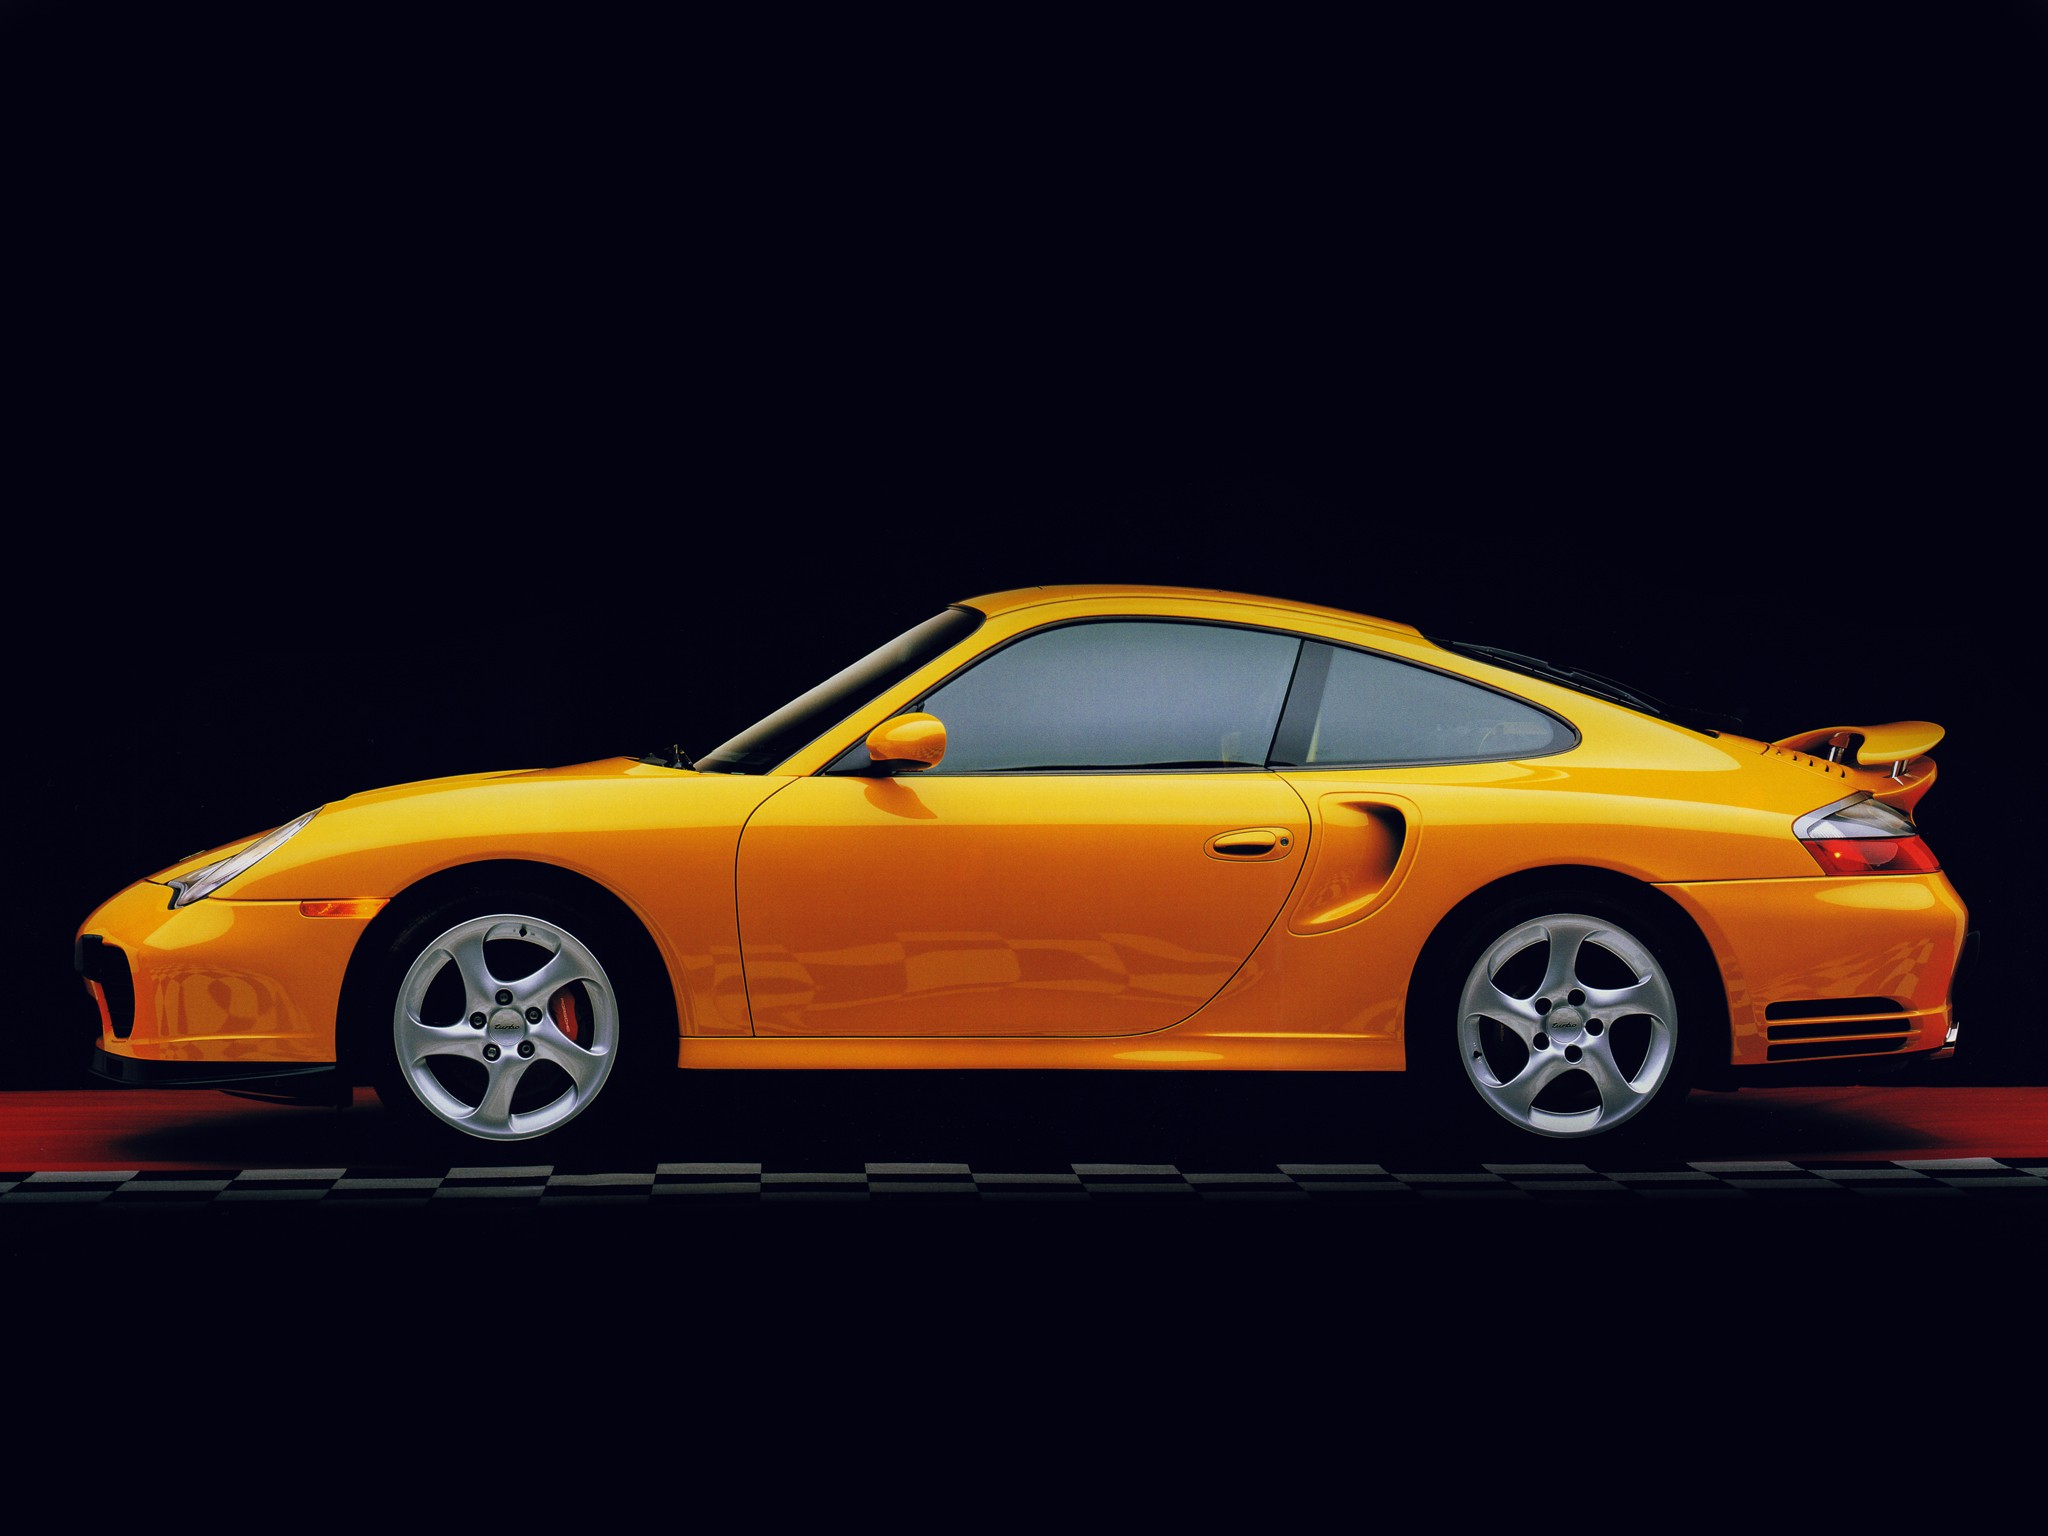 Porsche 911 Turbo (996) (2005) – Specifications